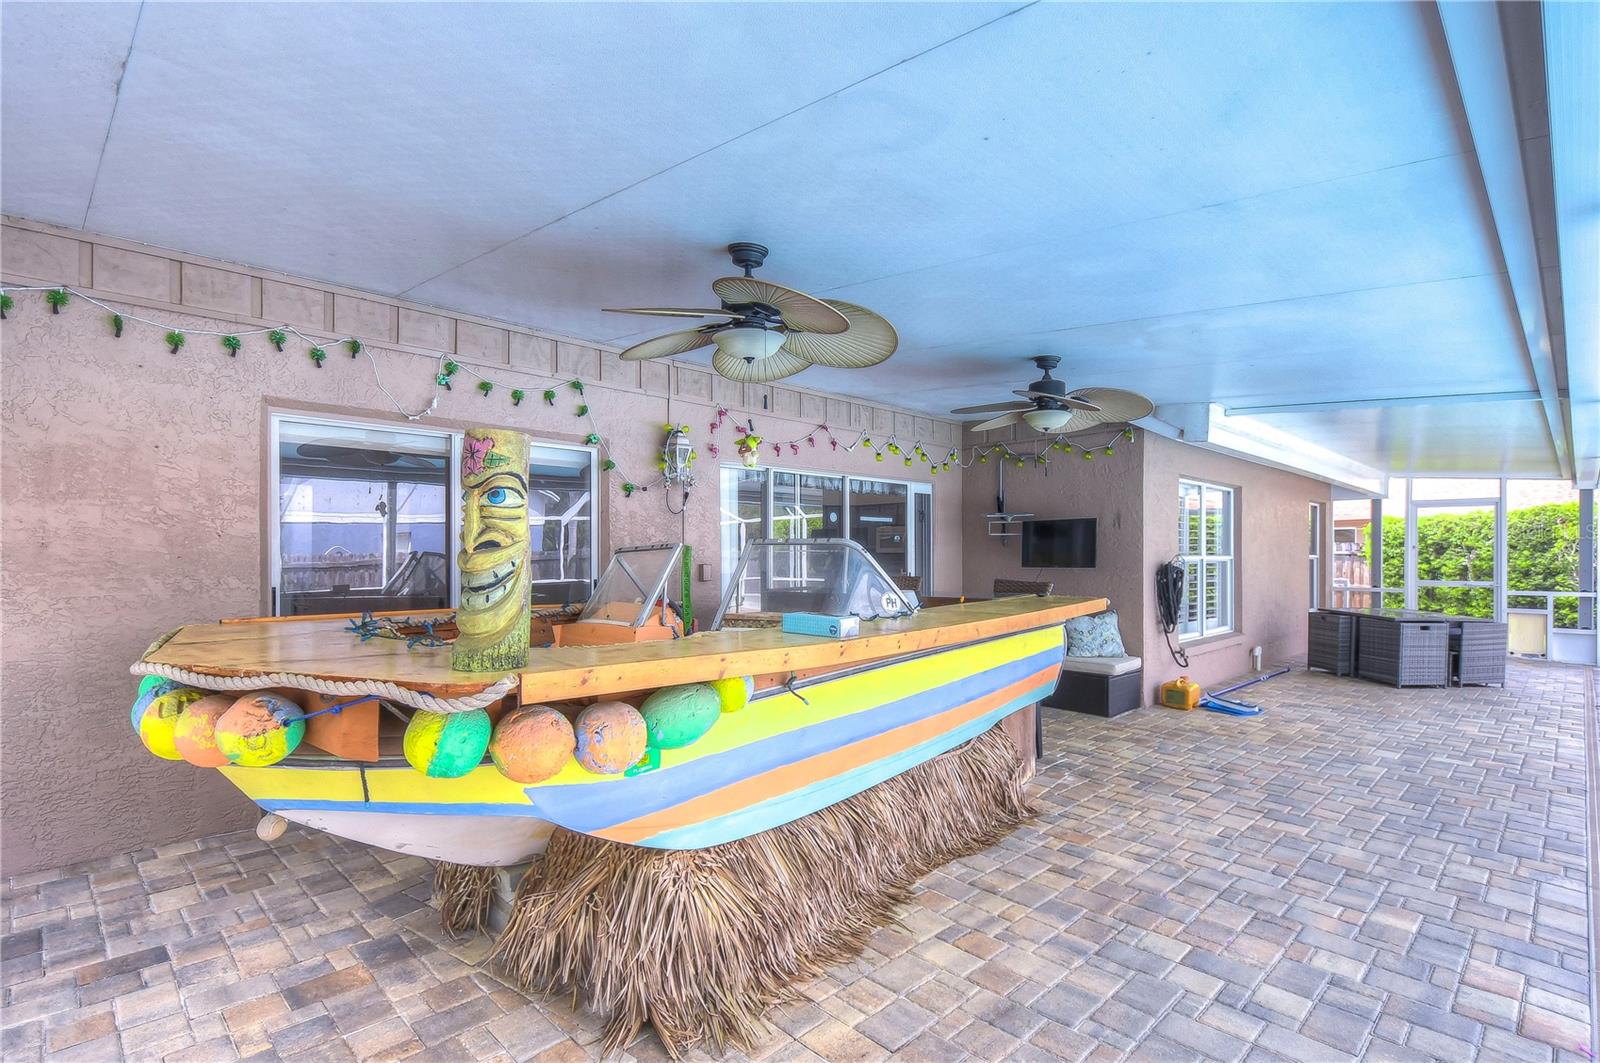 Boat themed bar!